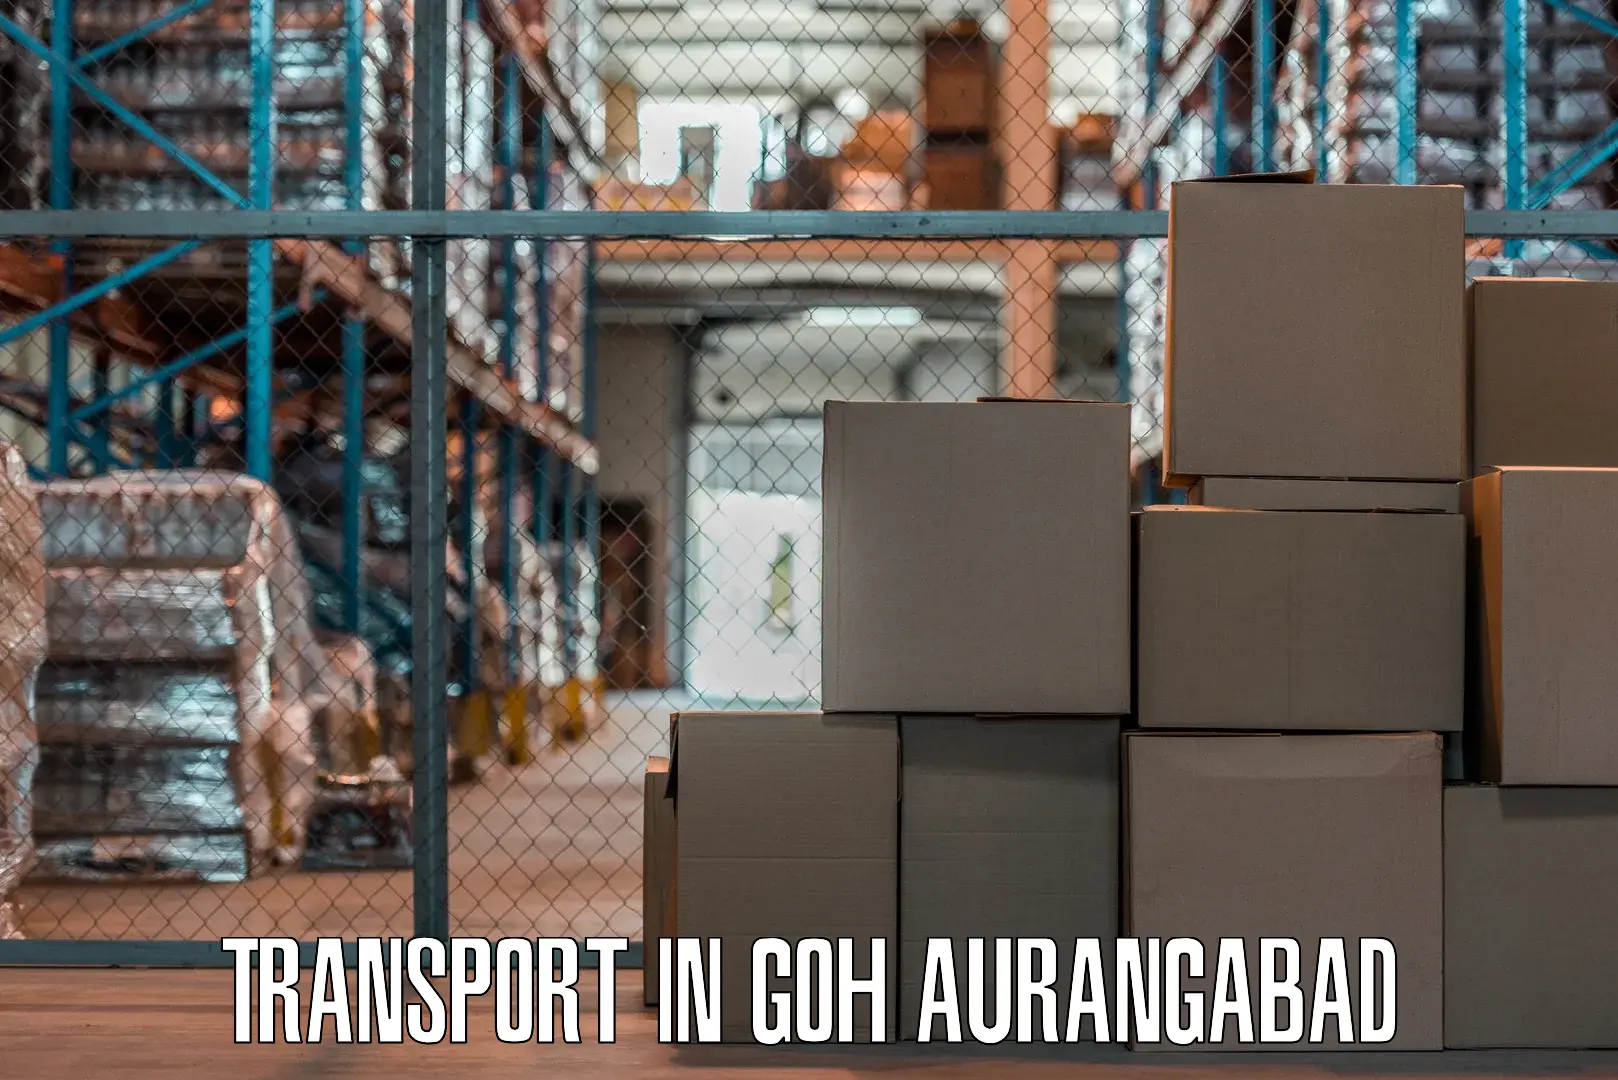 Daily parcel service transport in Goh Aurangabad